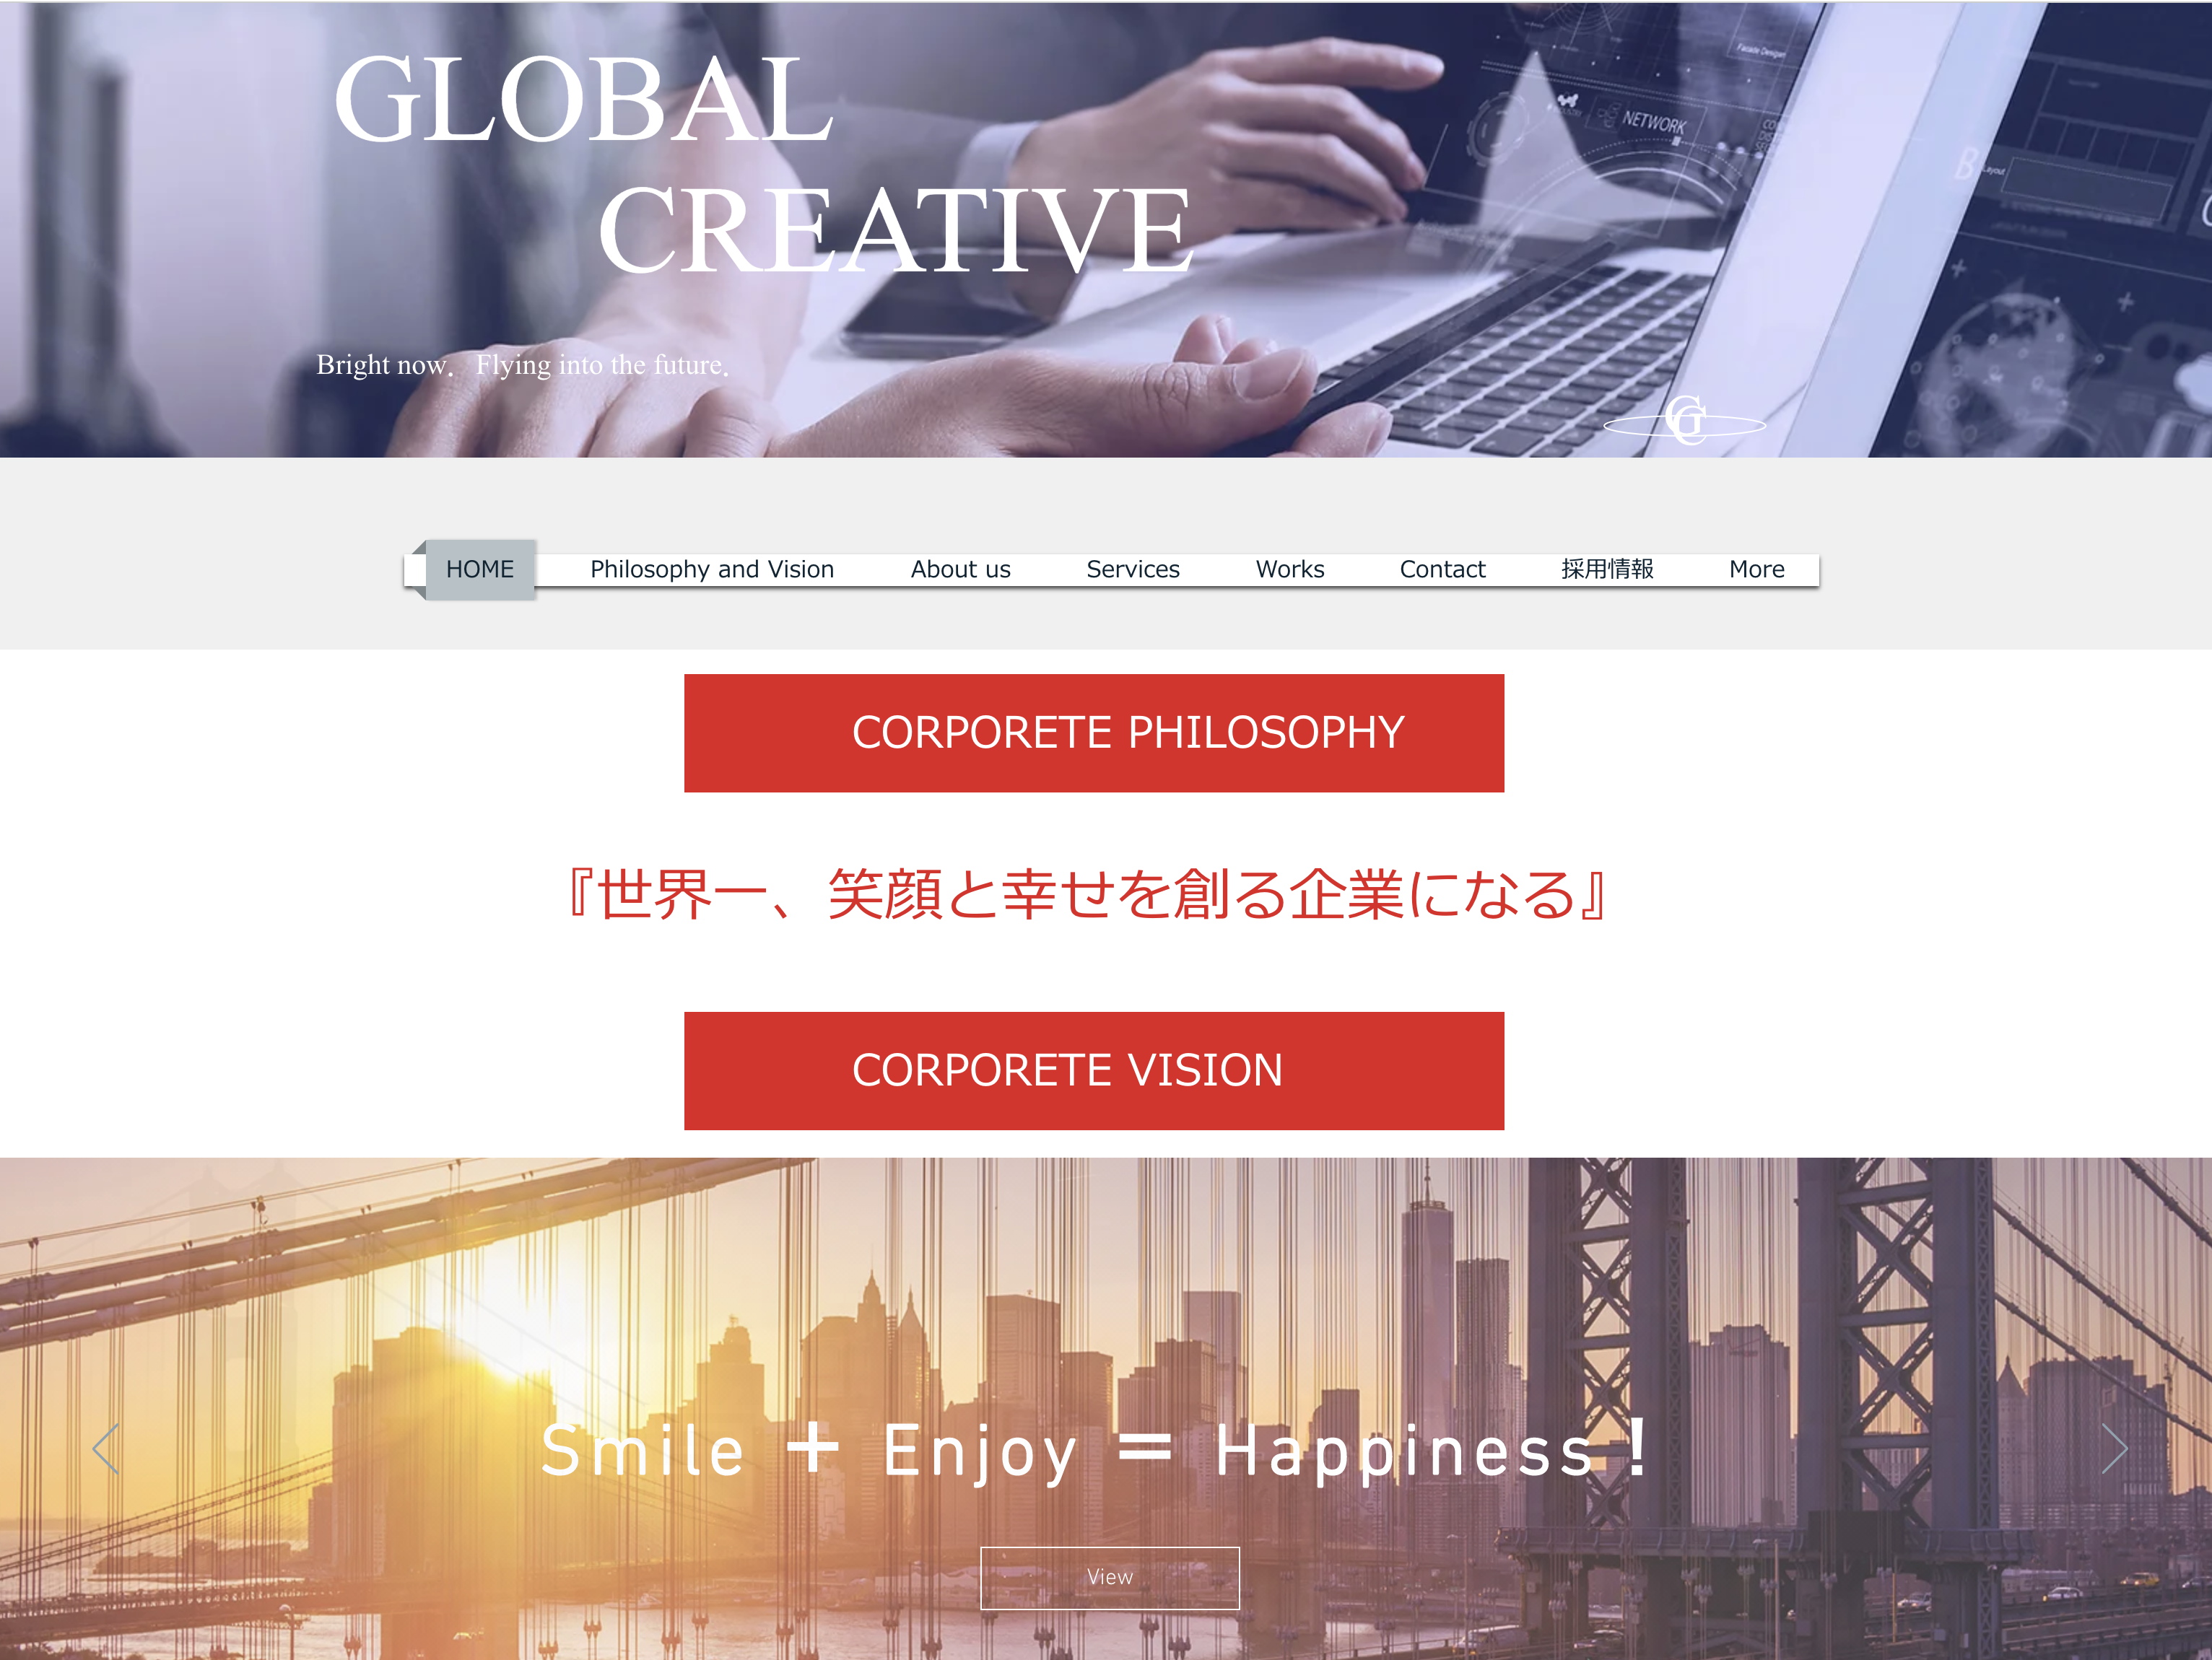 株式会社ＧＬＯＢＡＬ・ＣＲＥＡＴＩＶＥの株式会社GLOBAL CREATIVE:Web広告サービス